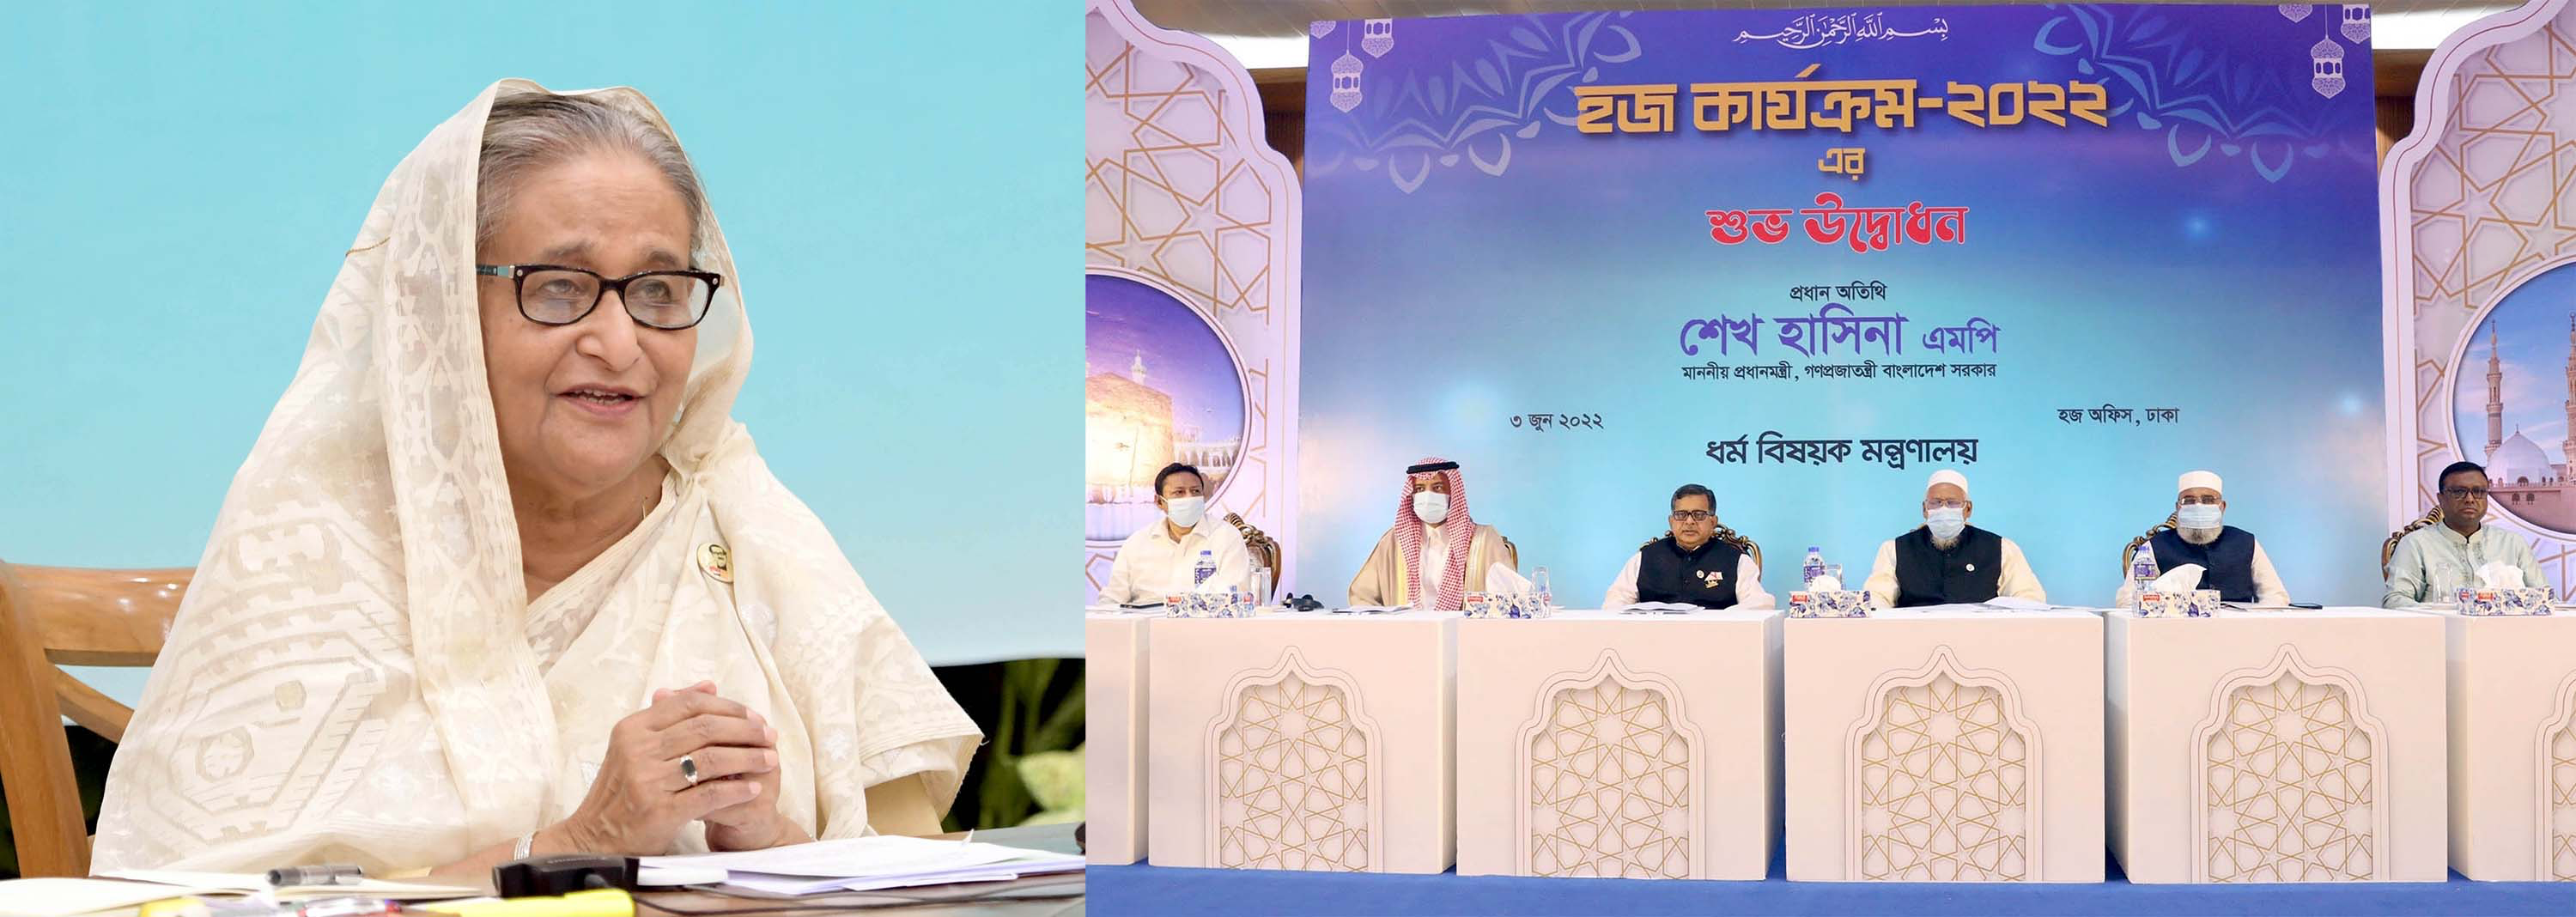 PM urges hajj pilgrims to pray for country's welfare, economic progress